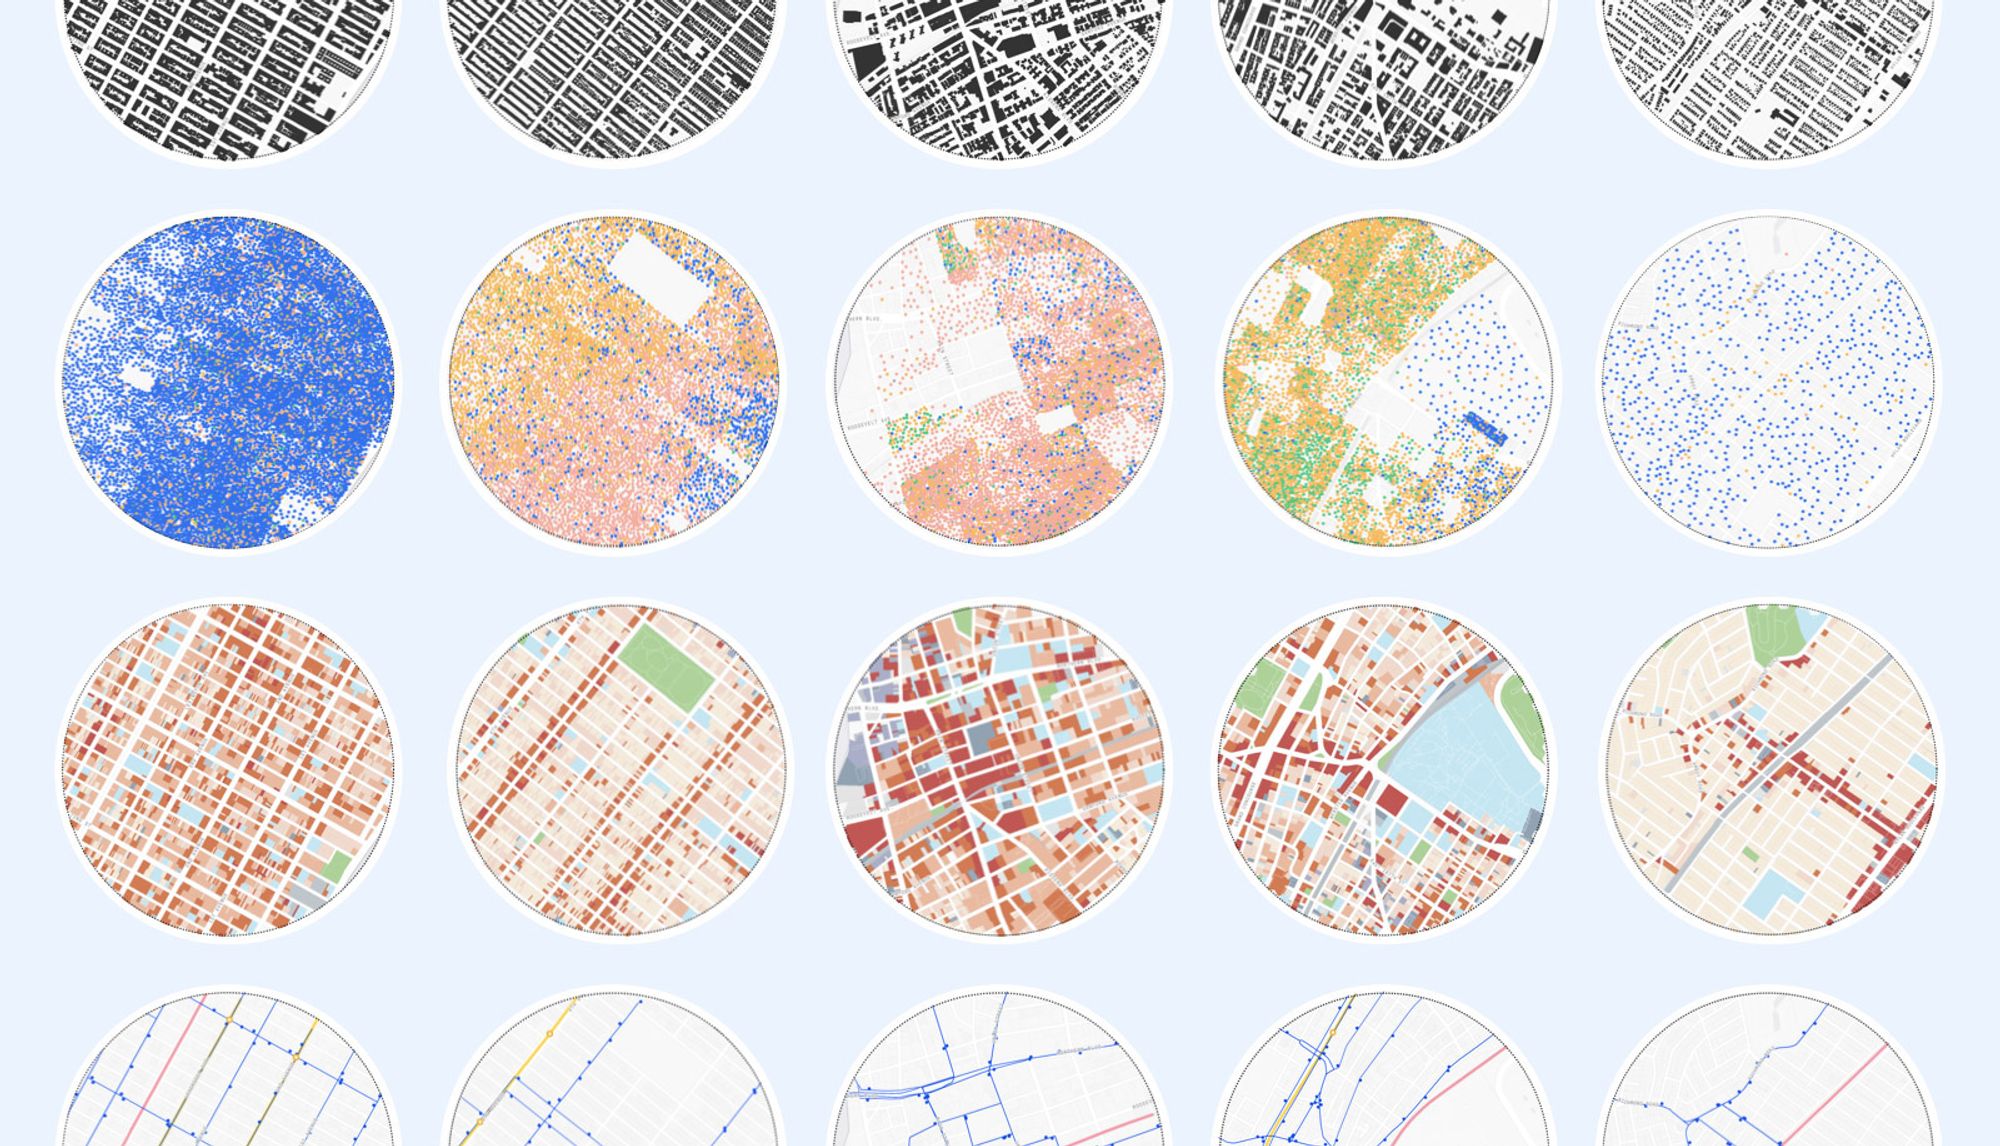 Morphocode Explorer - Interactive tool for urban analysis